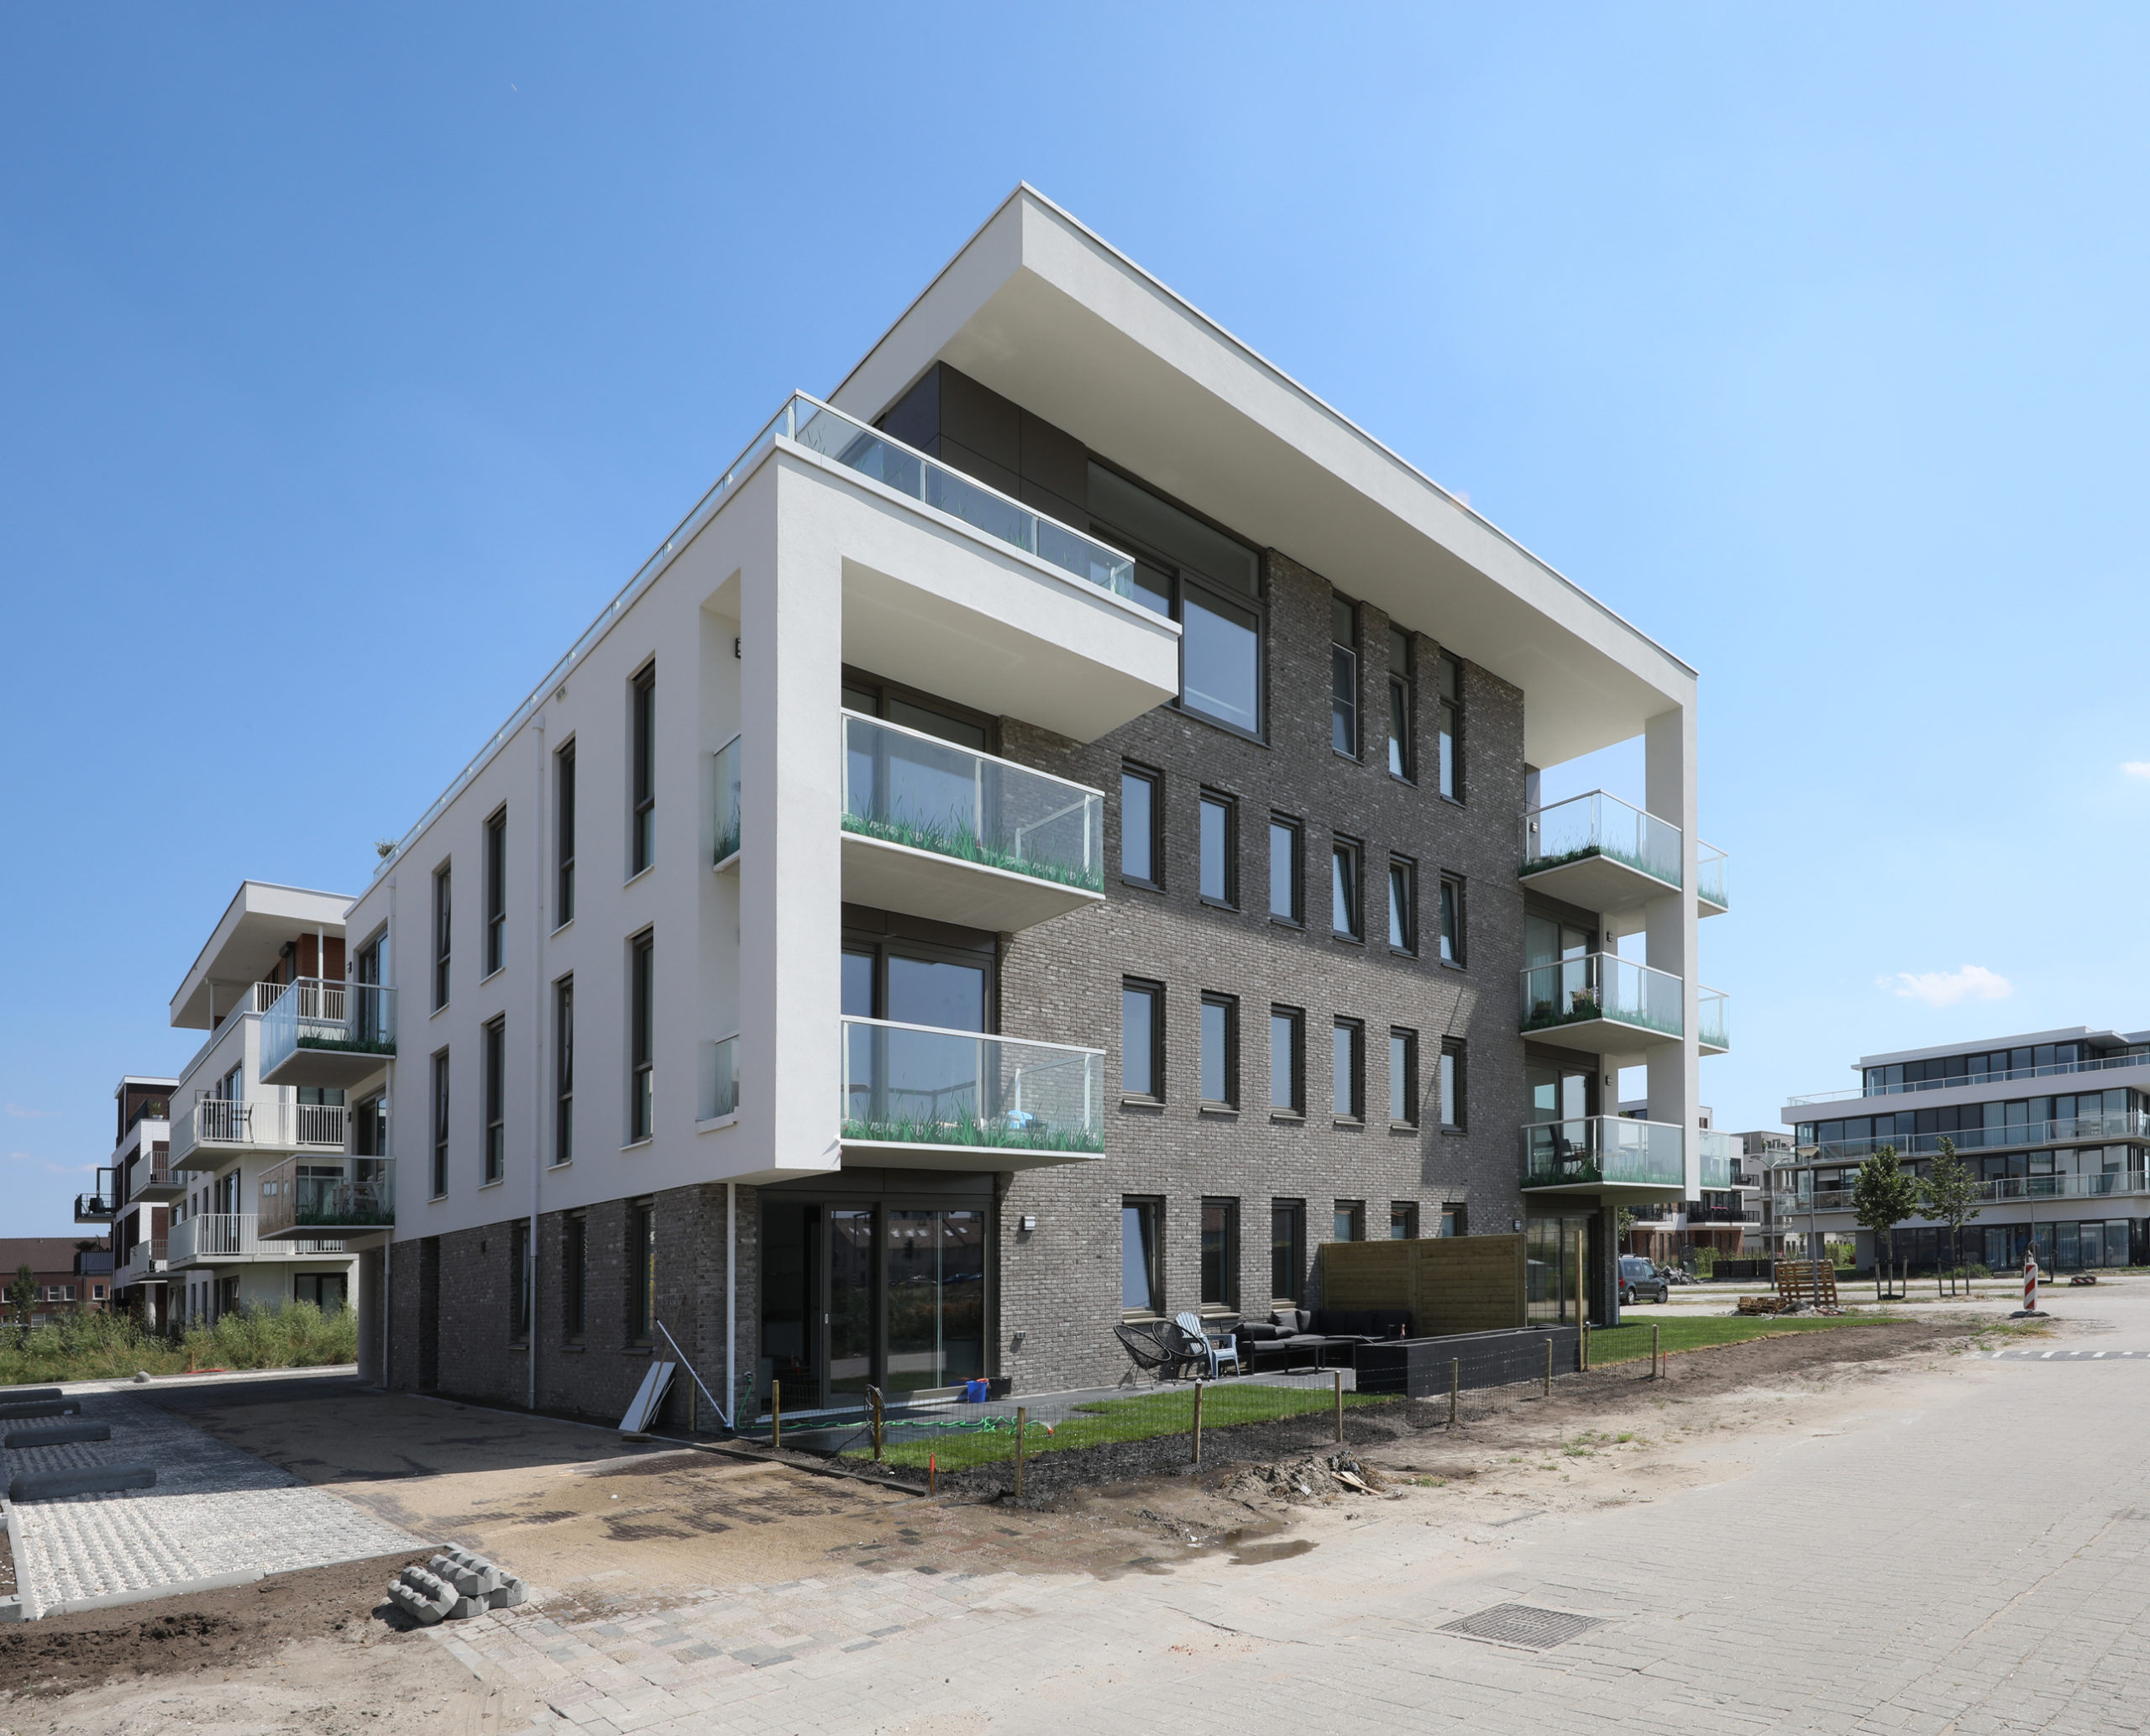 Appartementen complex Freestate Building Almere Poort | Olof Architects